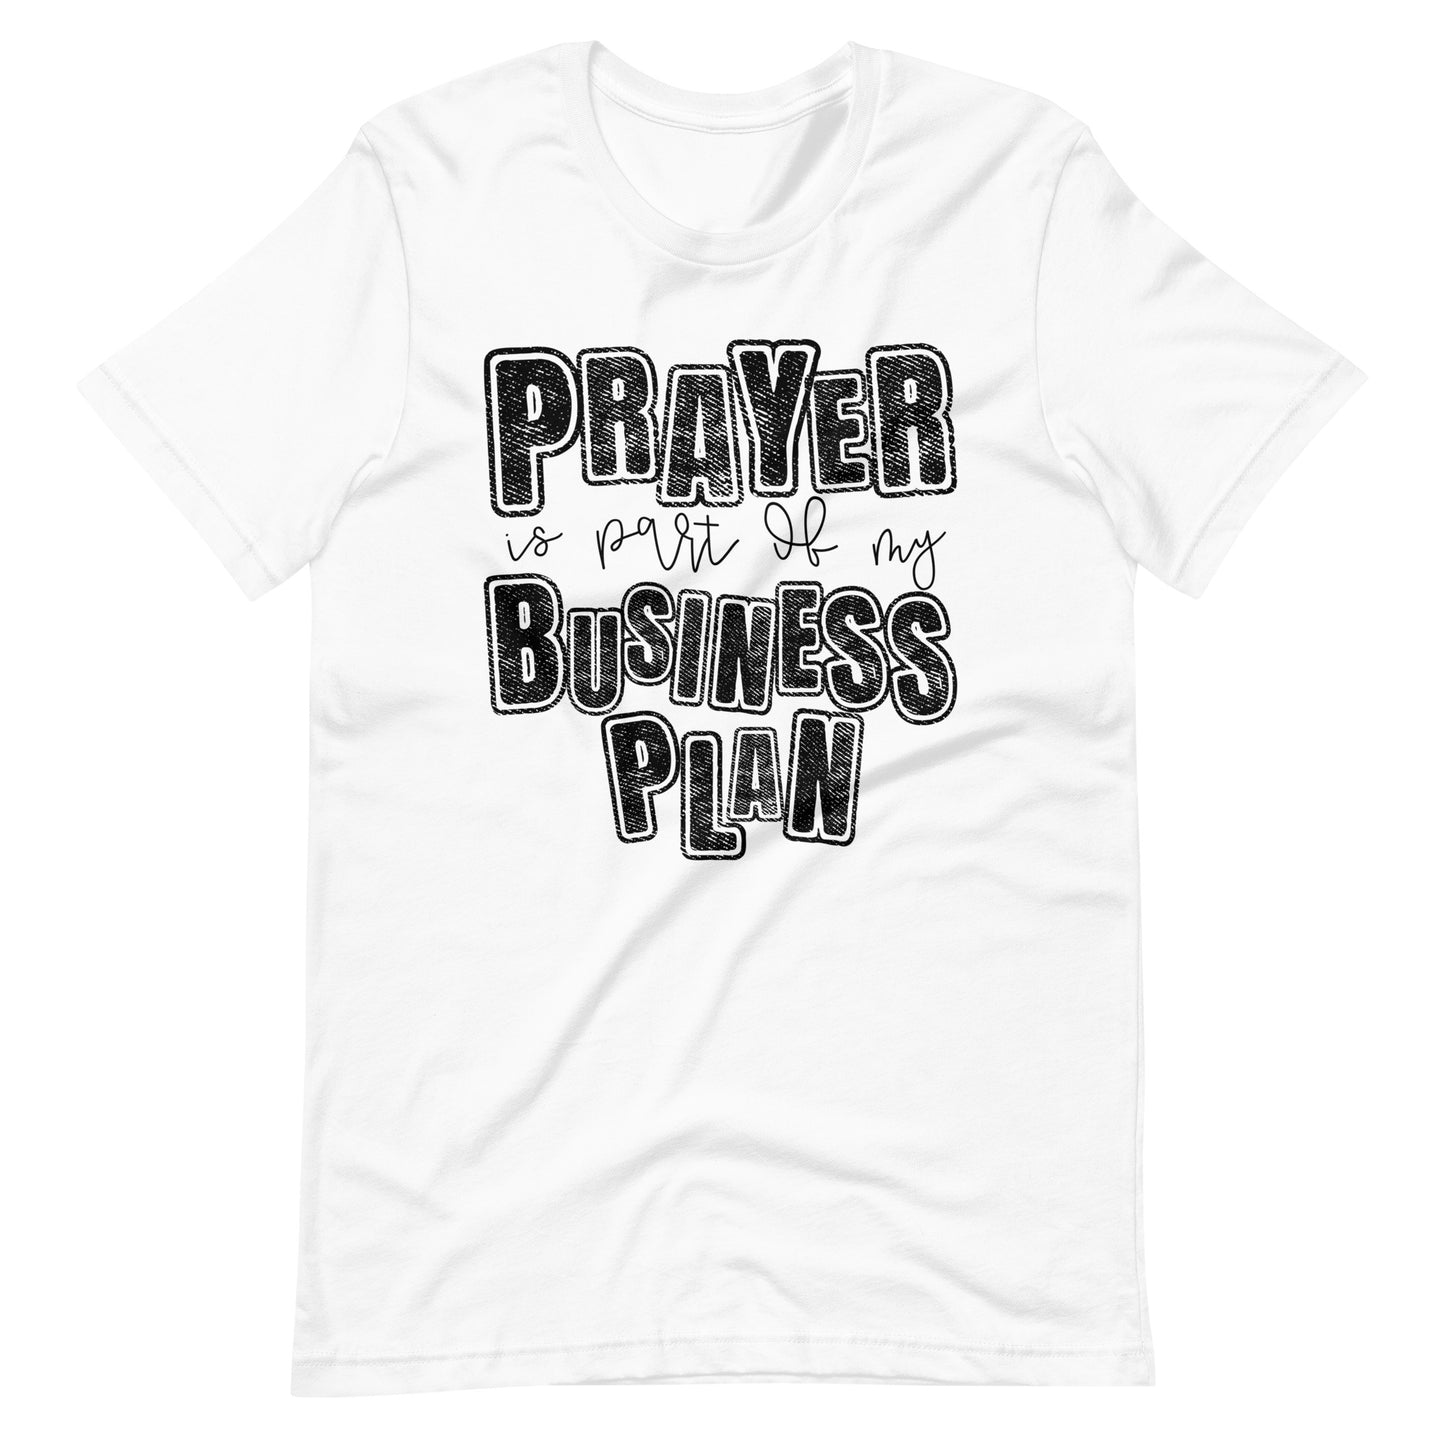 Prayer is part of My Business Plan Unisex t-shirt